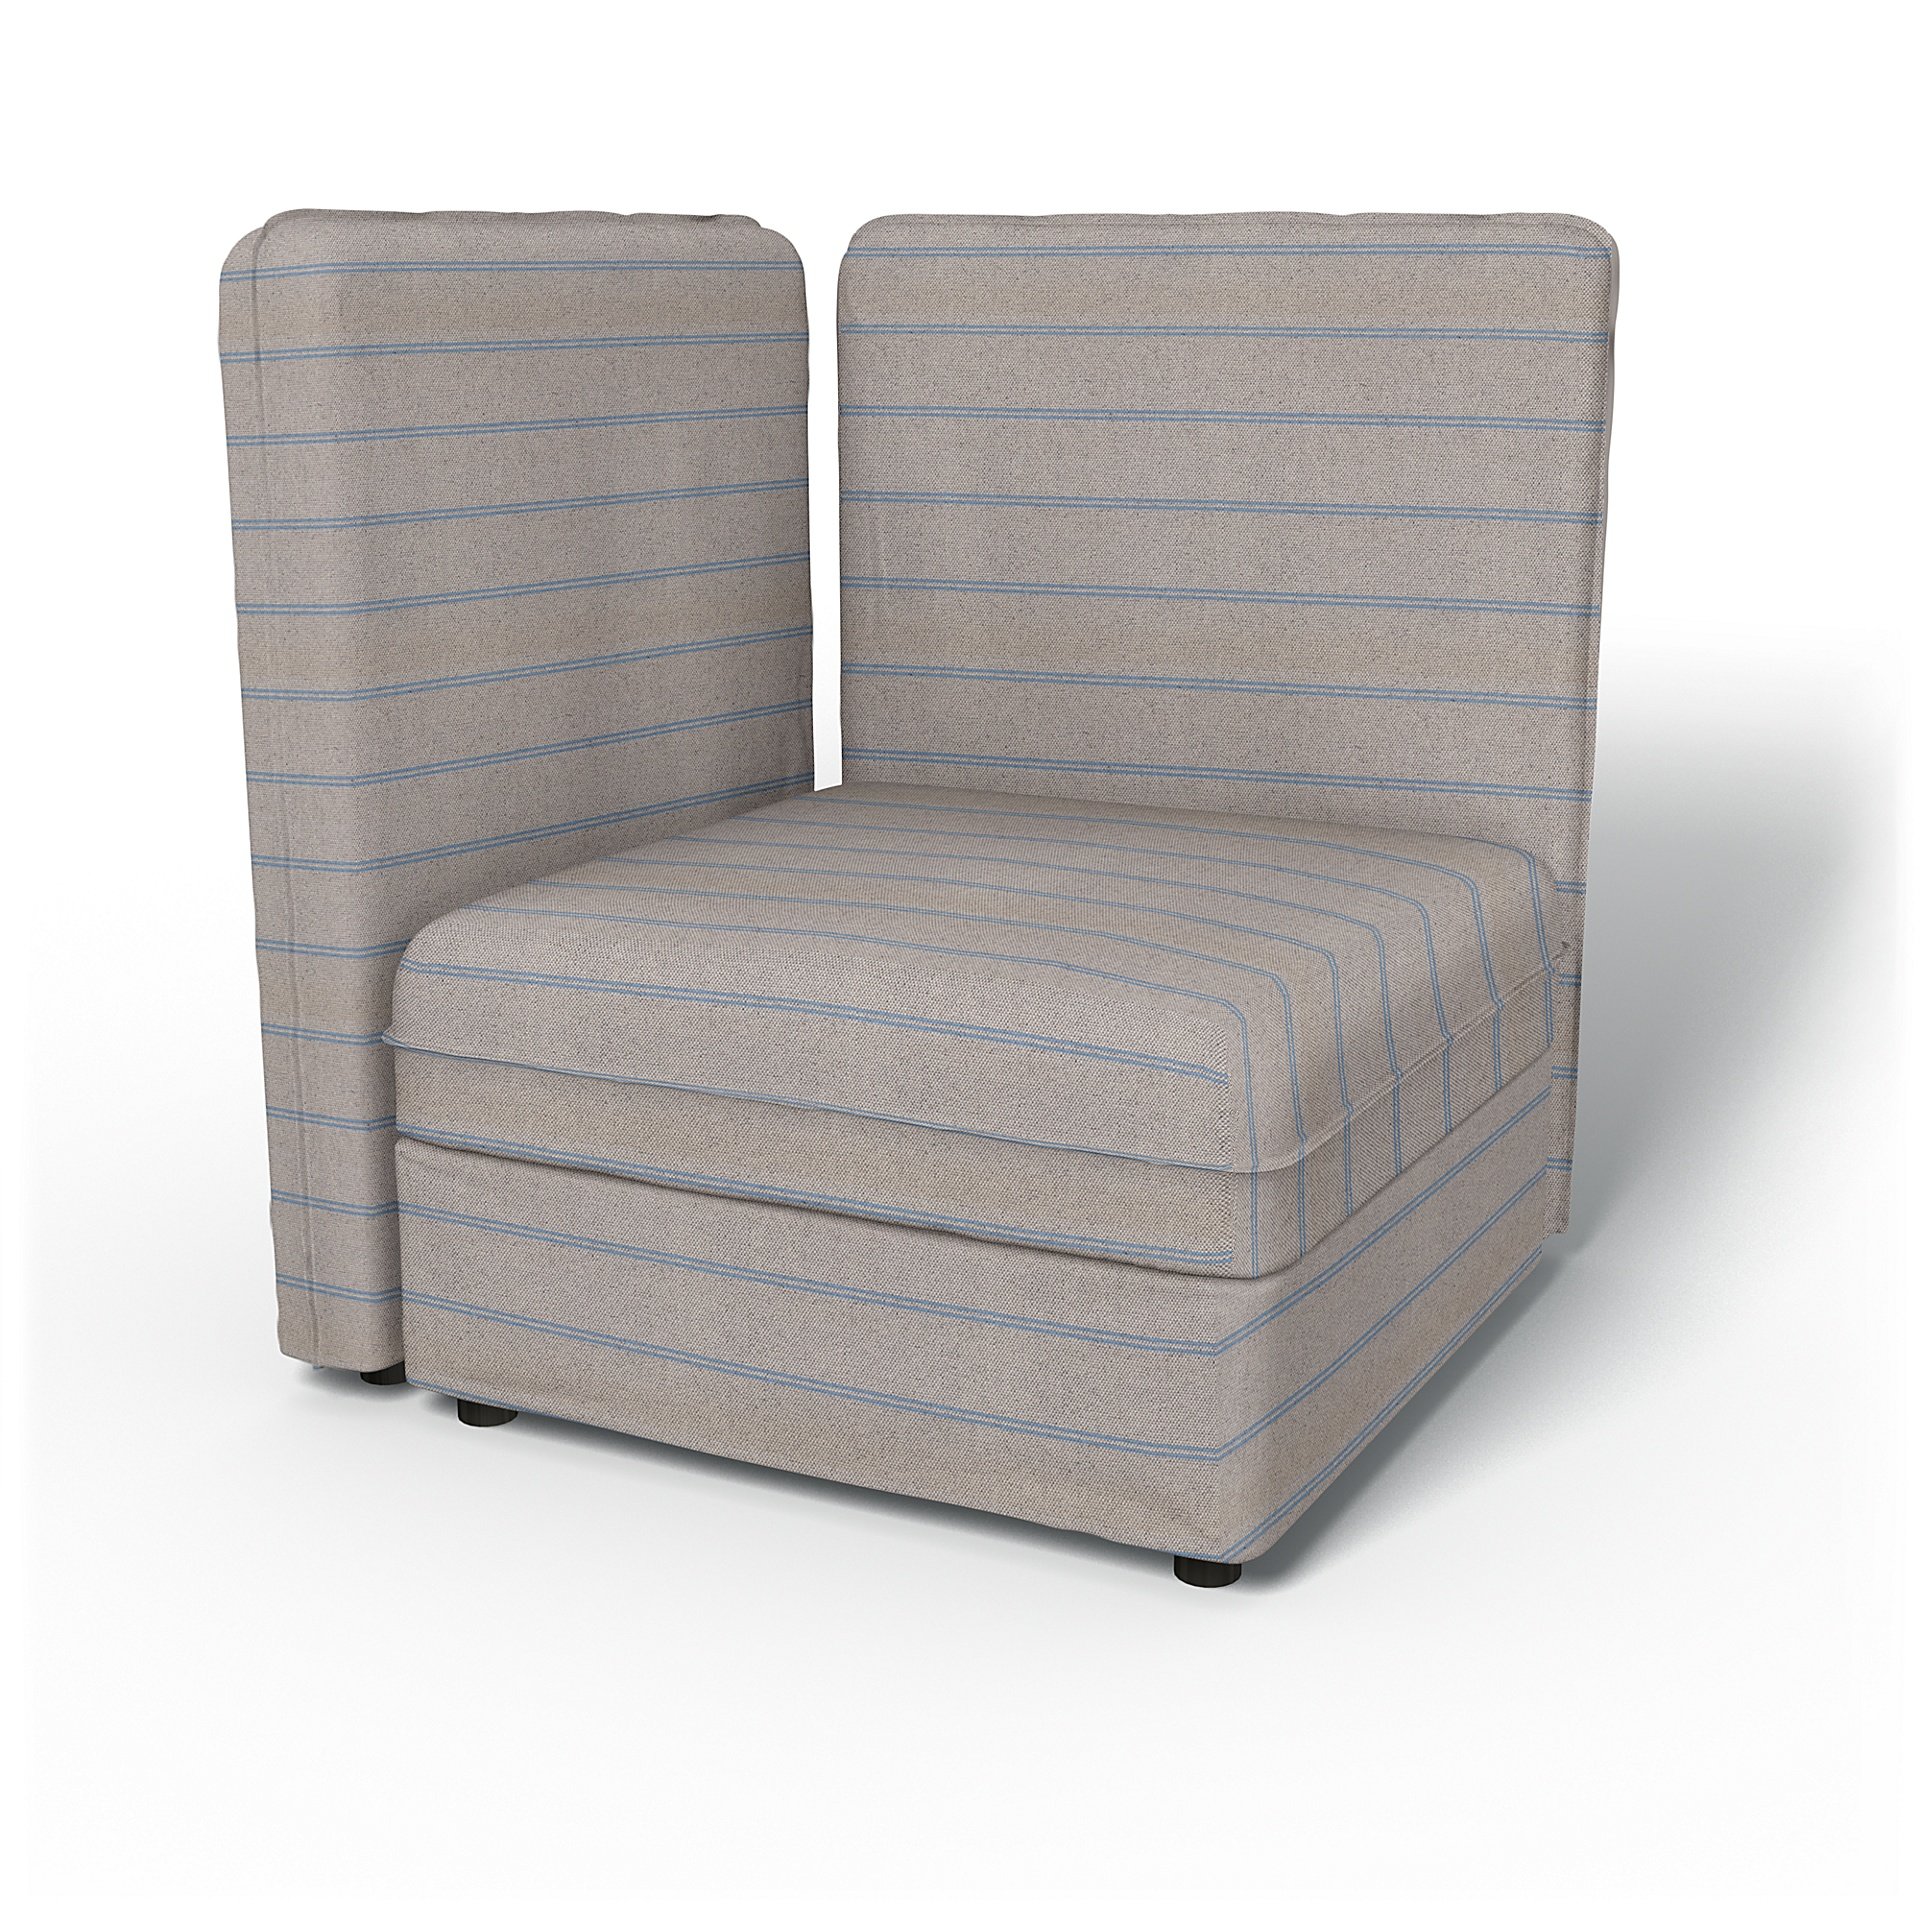 IKEA - Vallentuna Corner Seat Module with High Back and Storage Cover 80x80 32x32in, Blue Stripe, Co